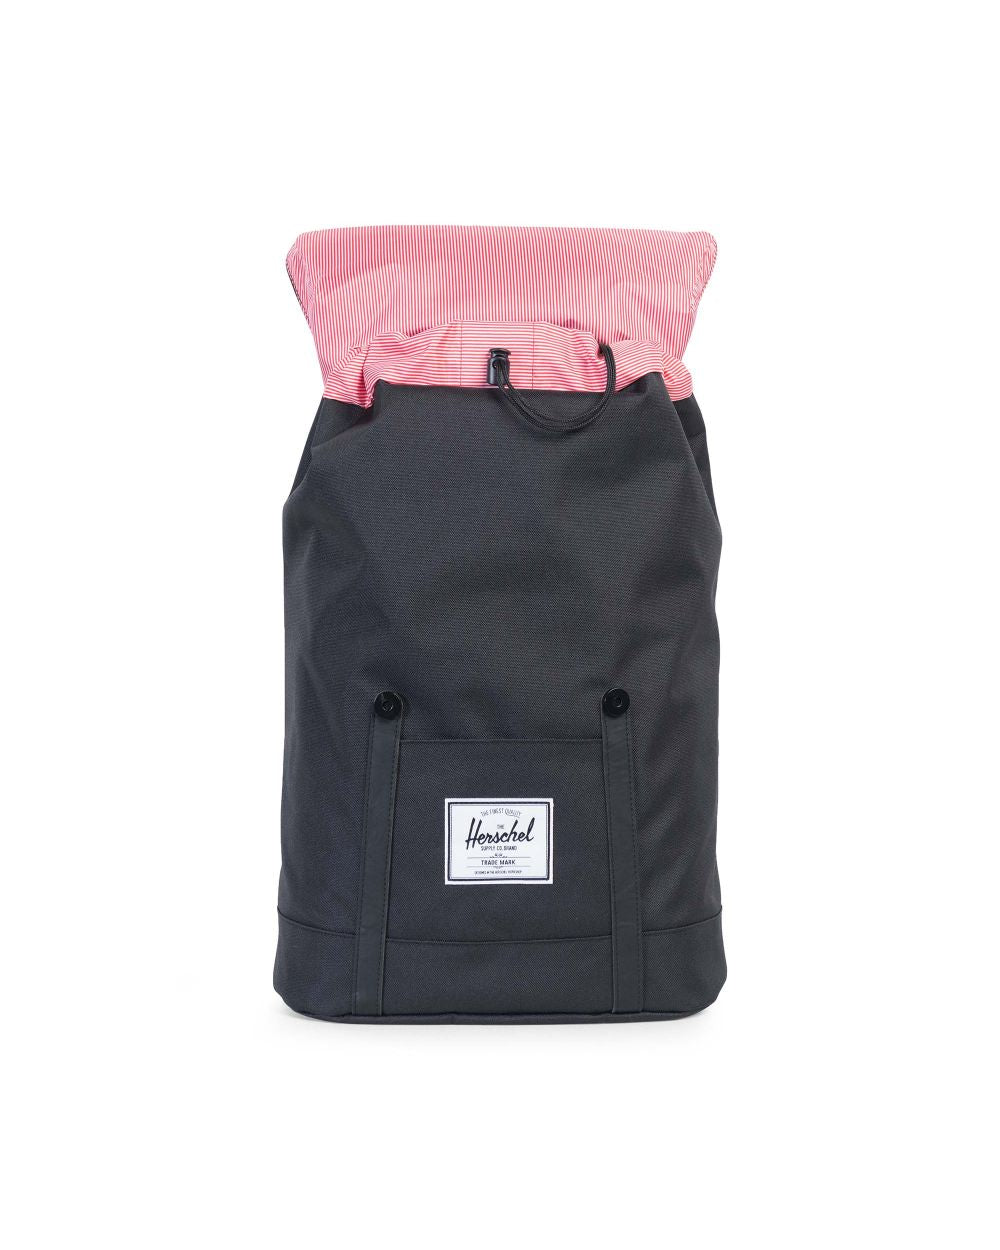 Herschel Supply Co. - Retreat Backpack, Black/Black PU